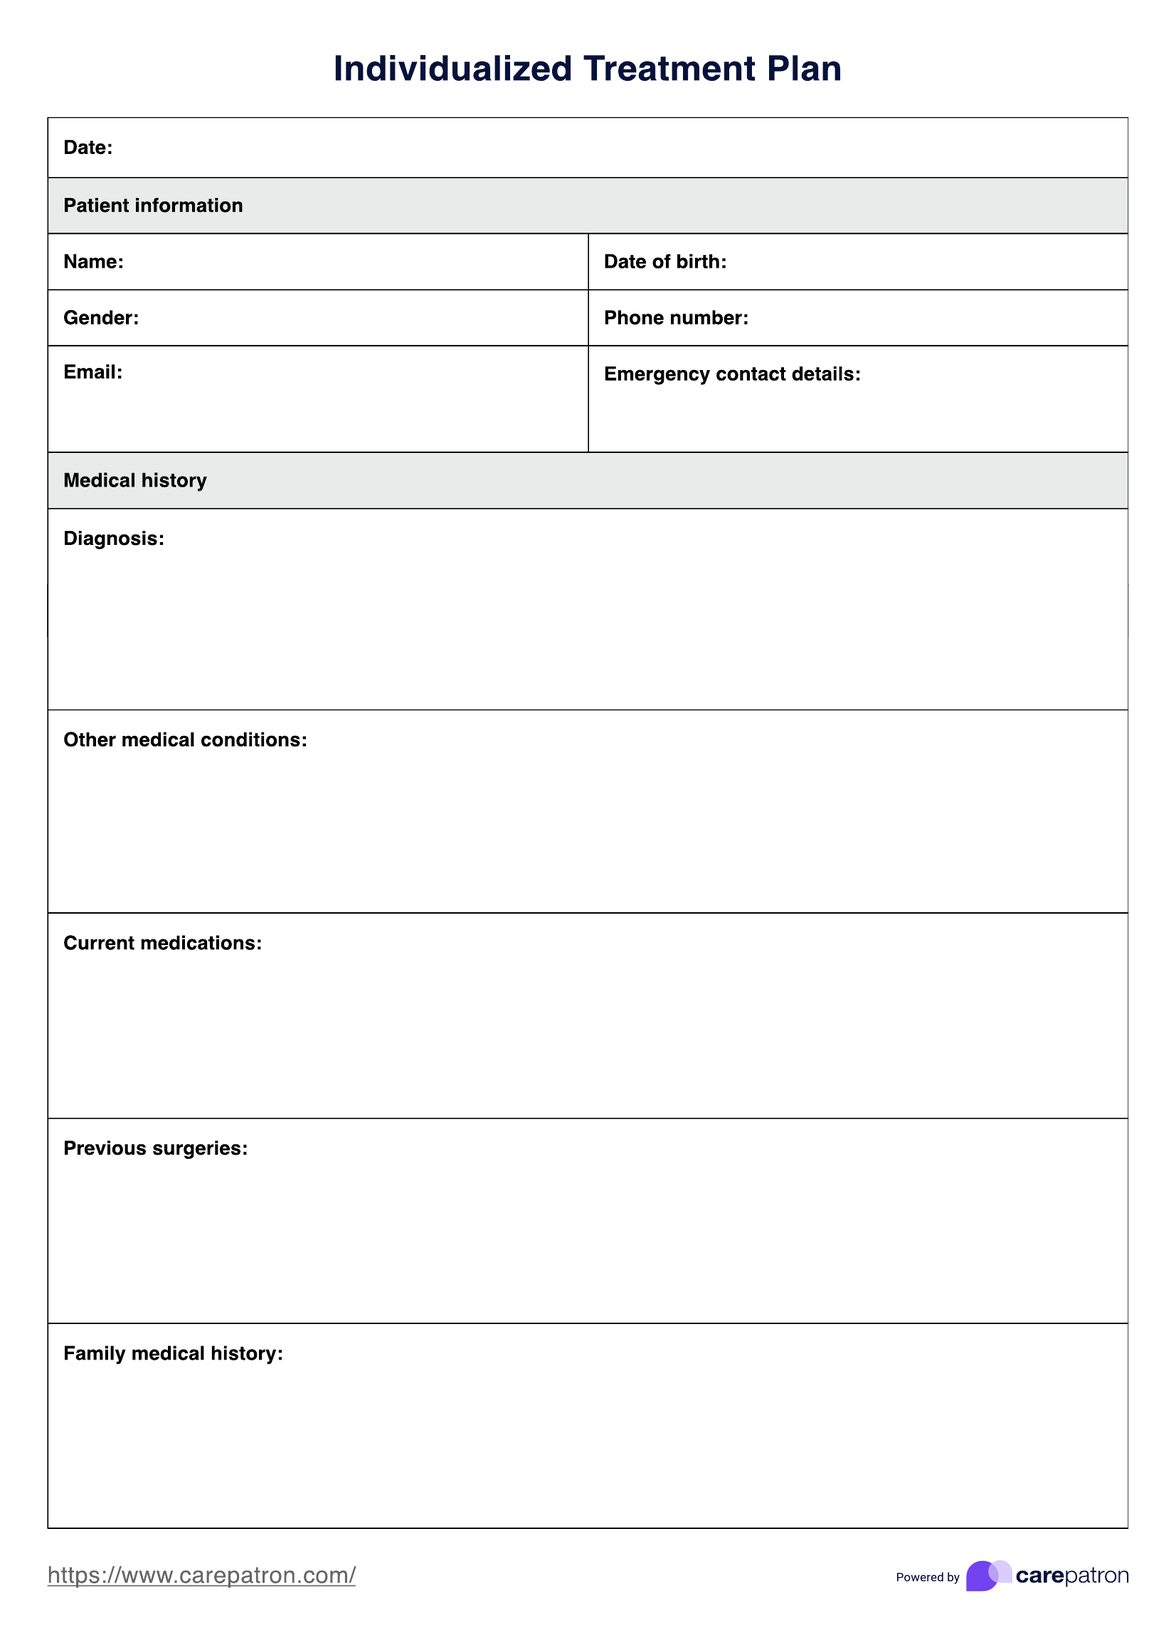 Individualized Treatment Plan PDF Example